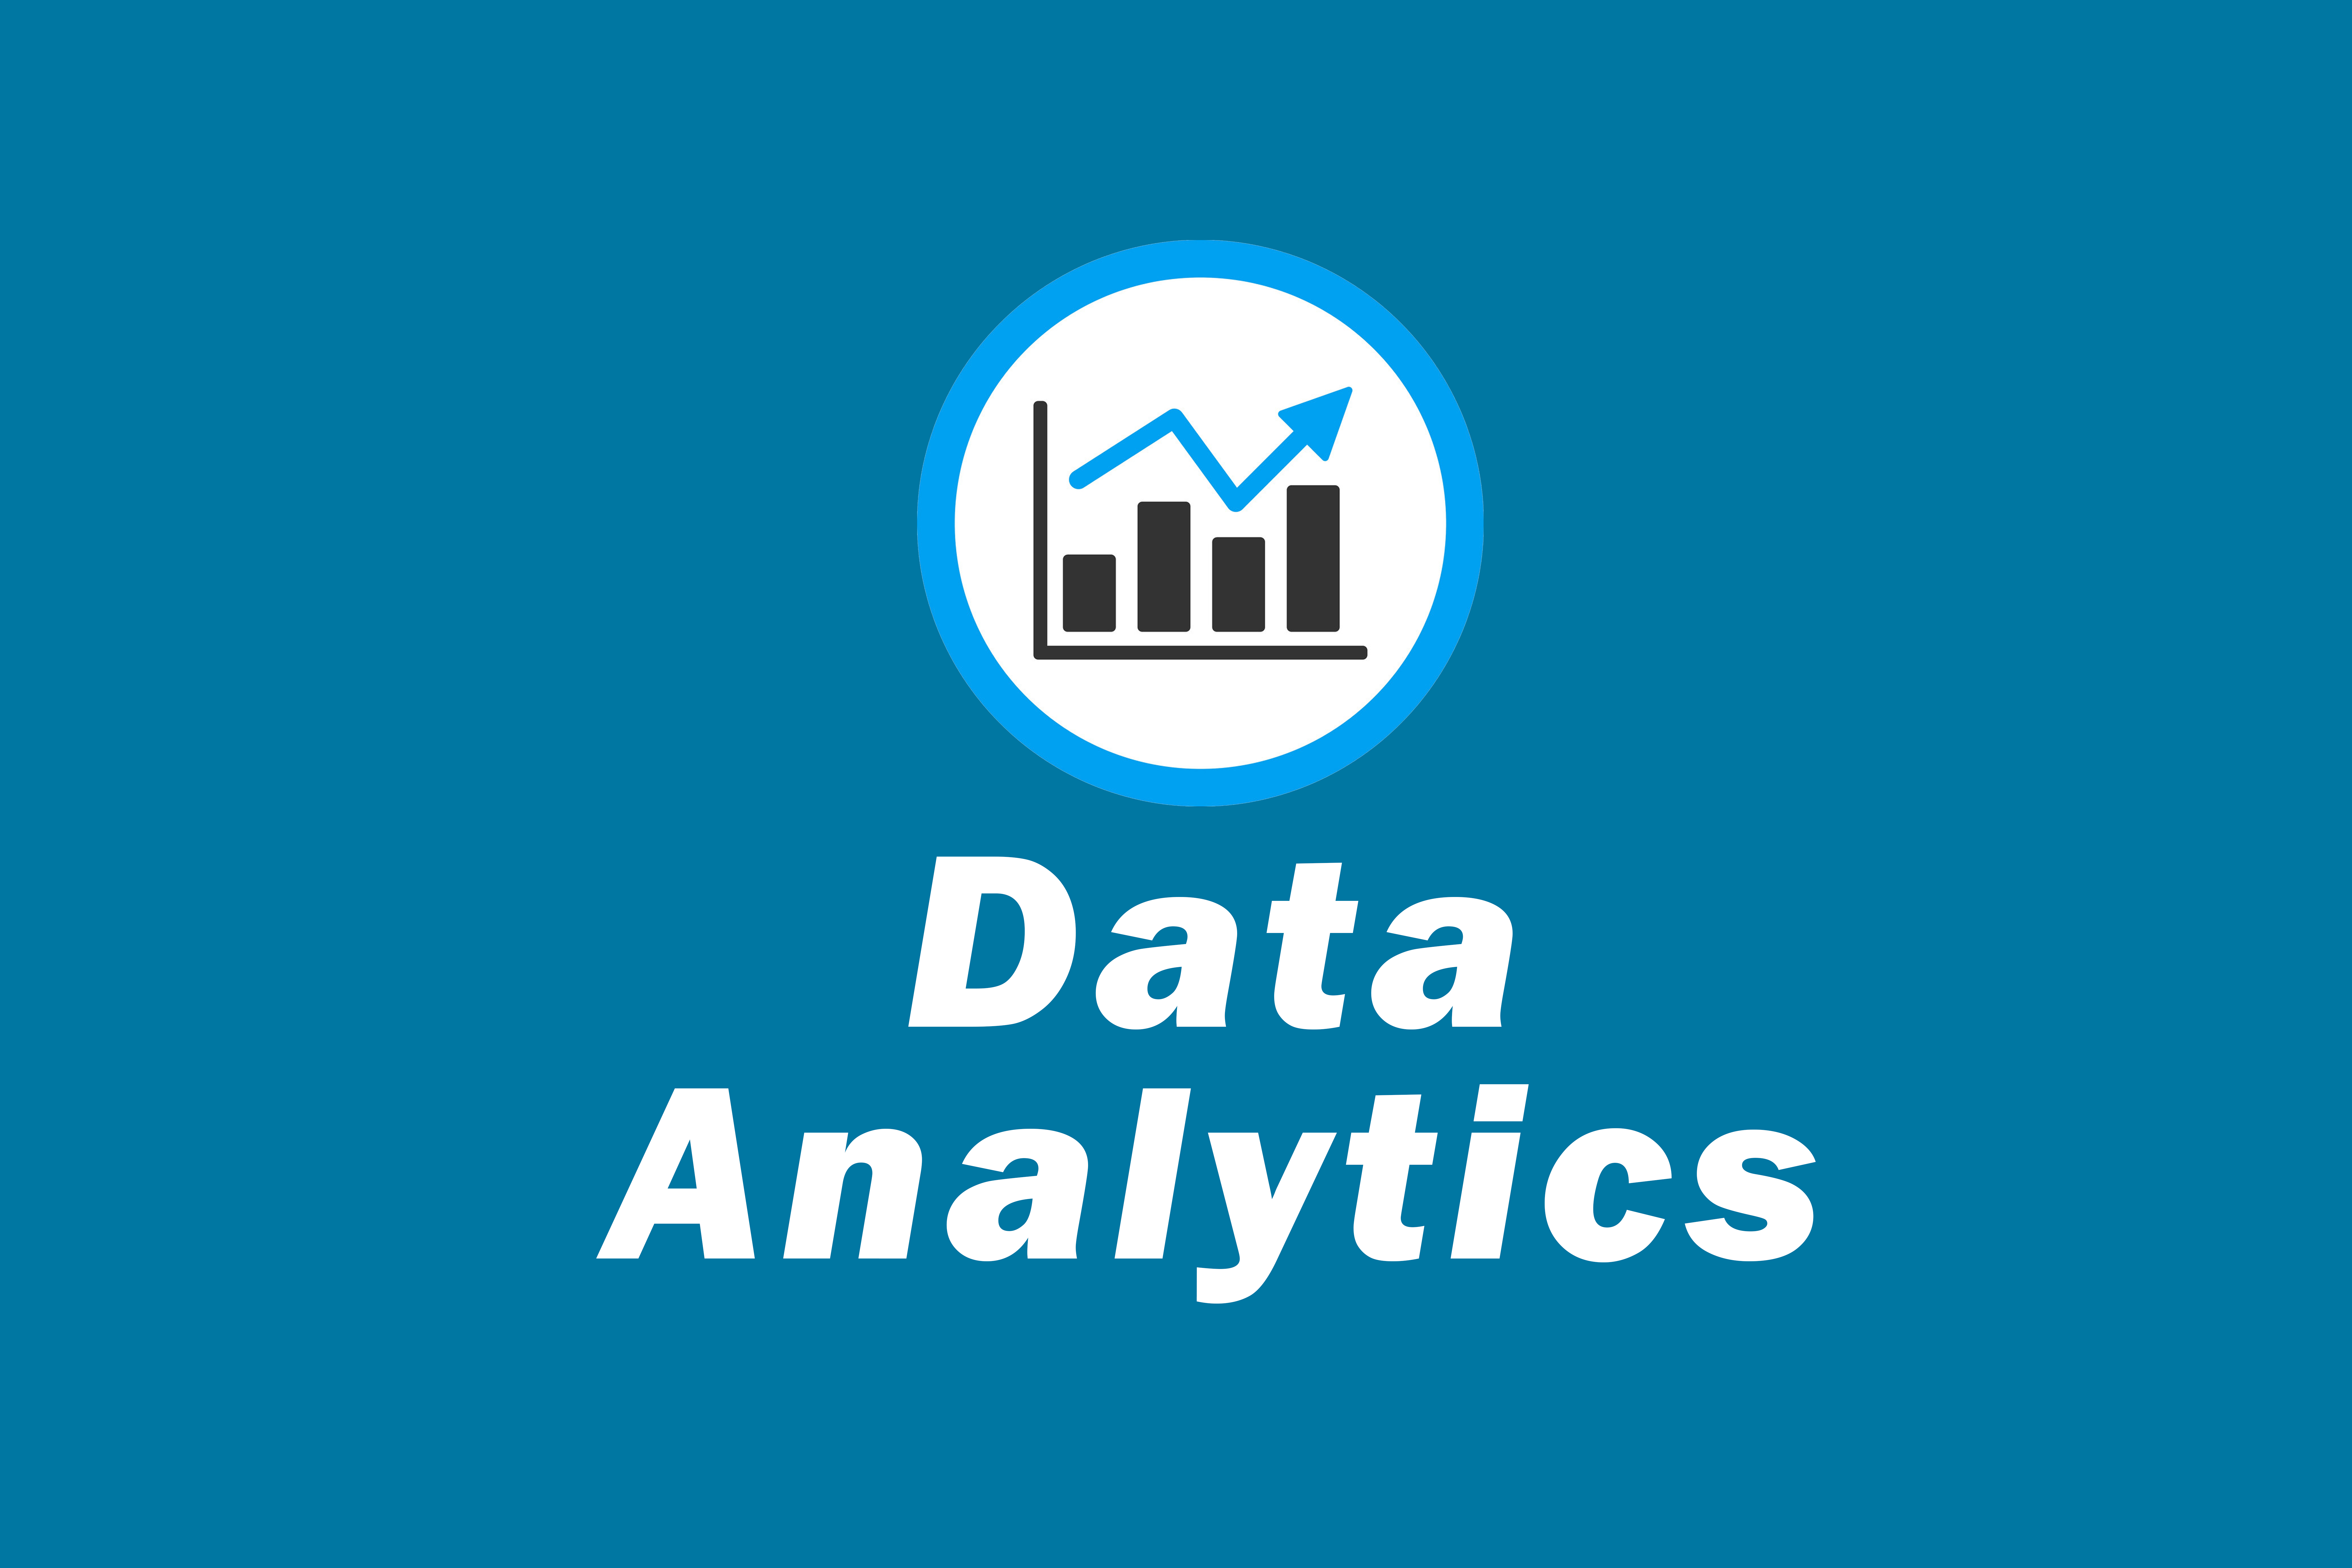 Data Analytics training in hyderabad